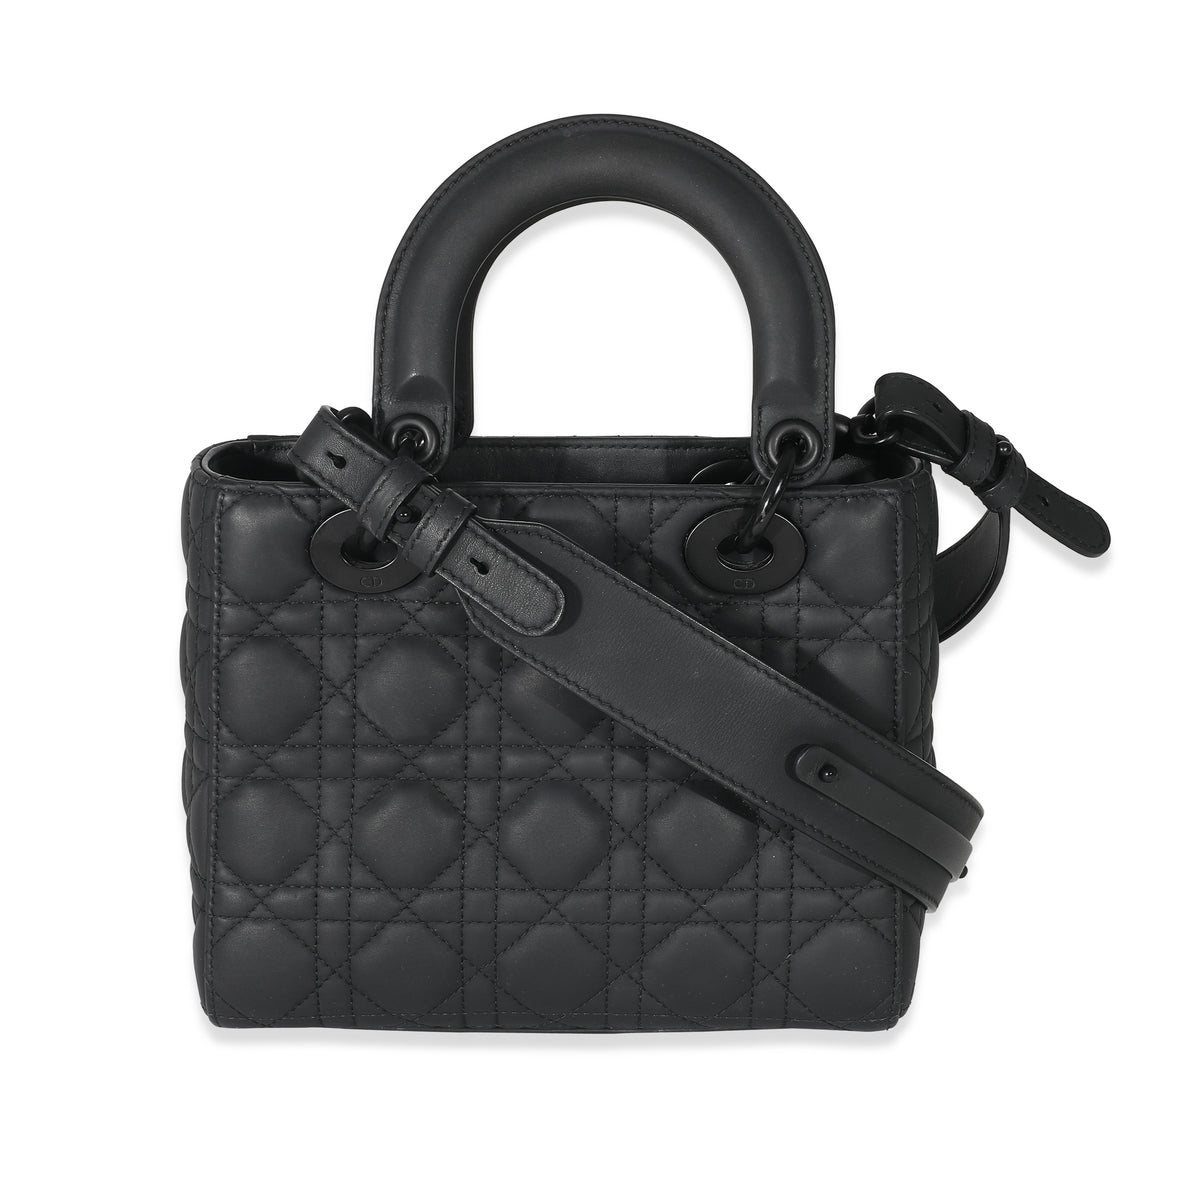 Should You Buy? Lady Dior My ABCDIOR Bag - YouTube